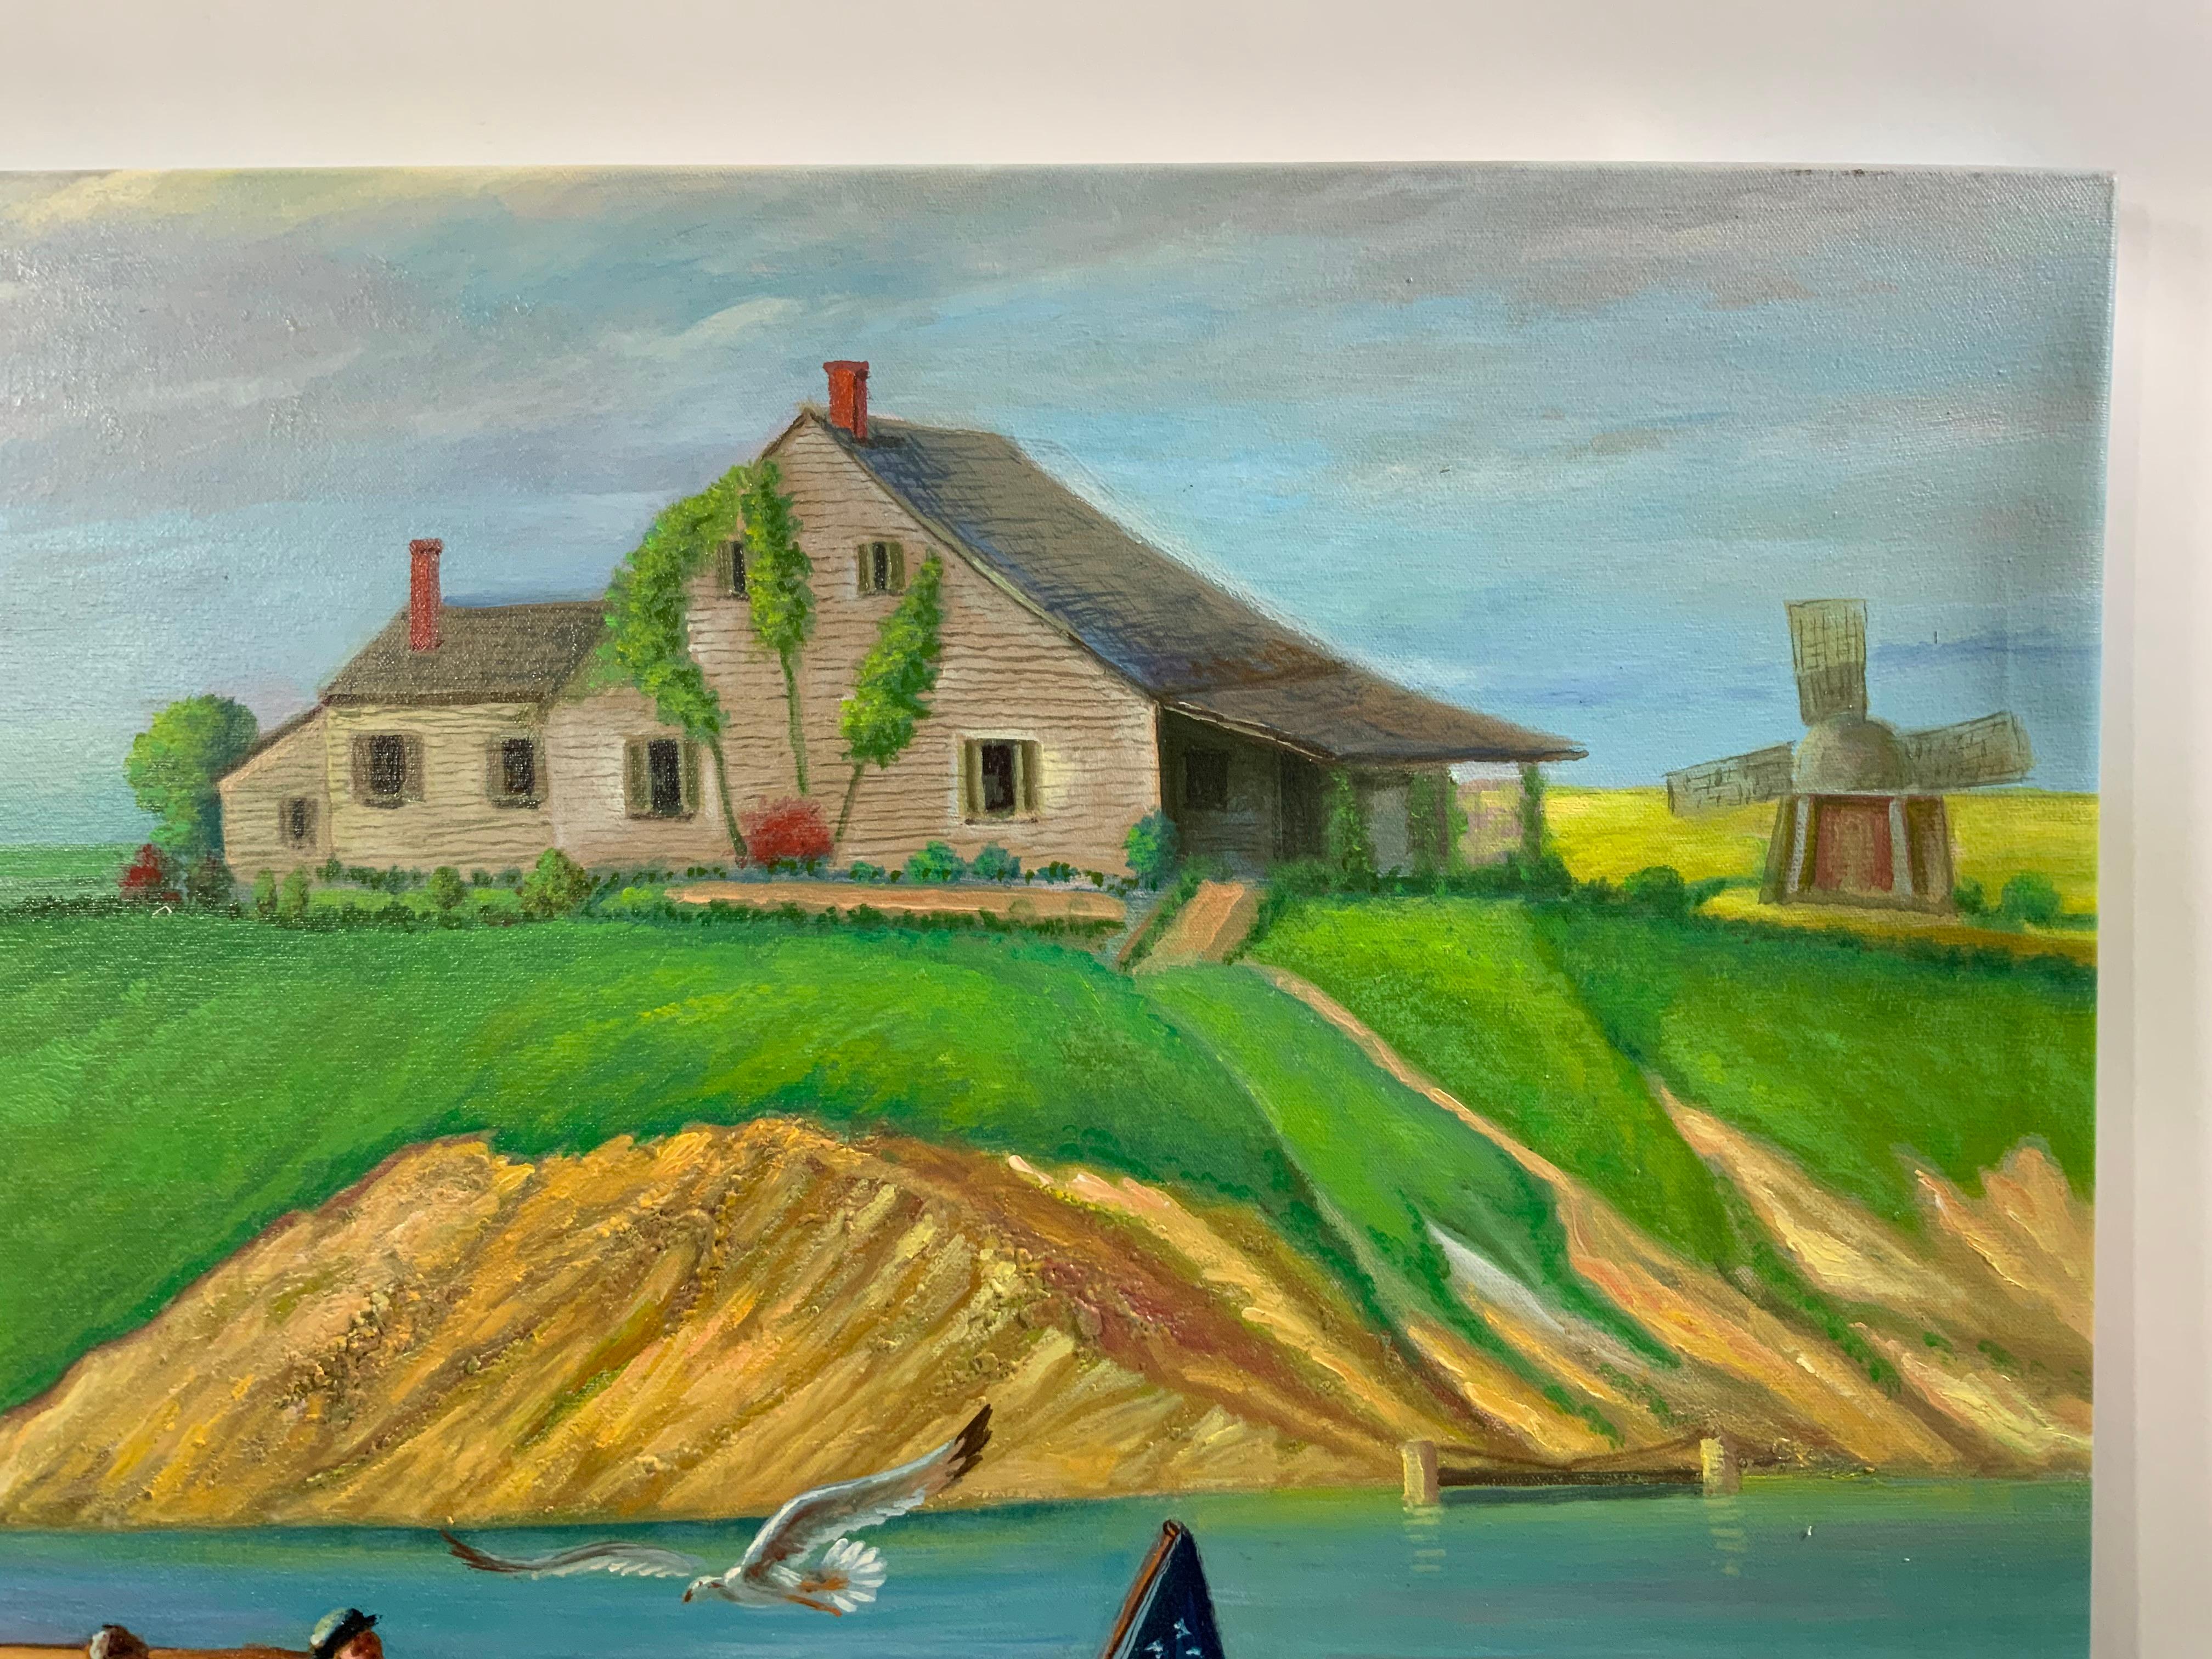 Contemporary Block Island Rhode Island For Sale